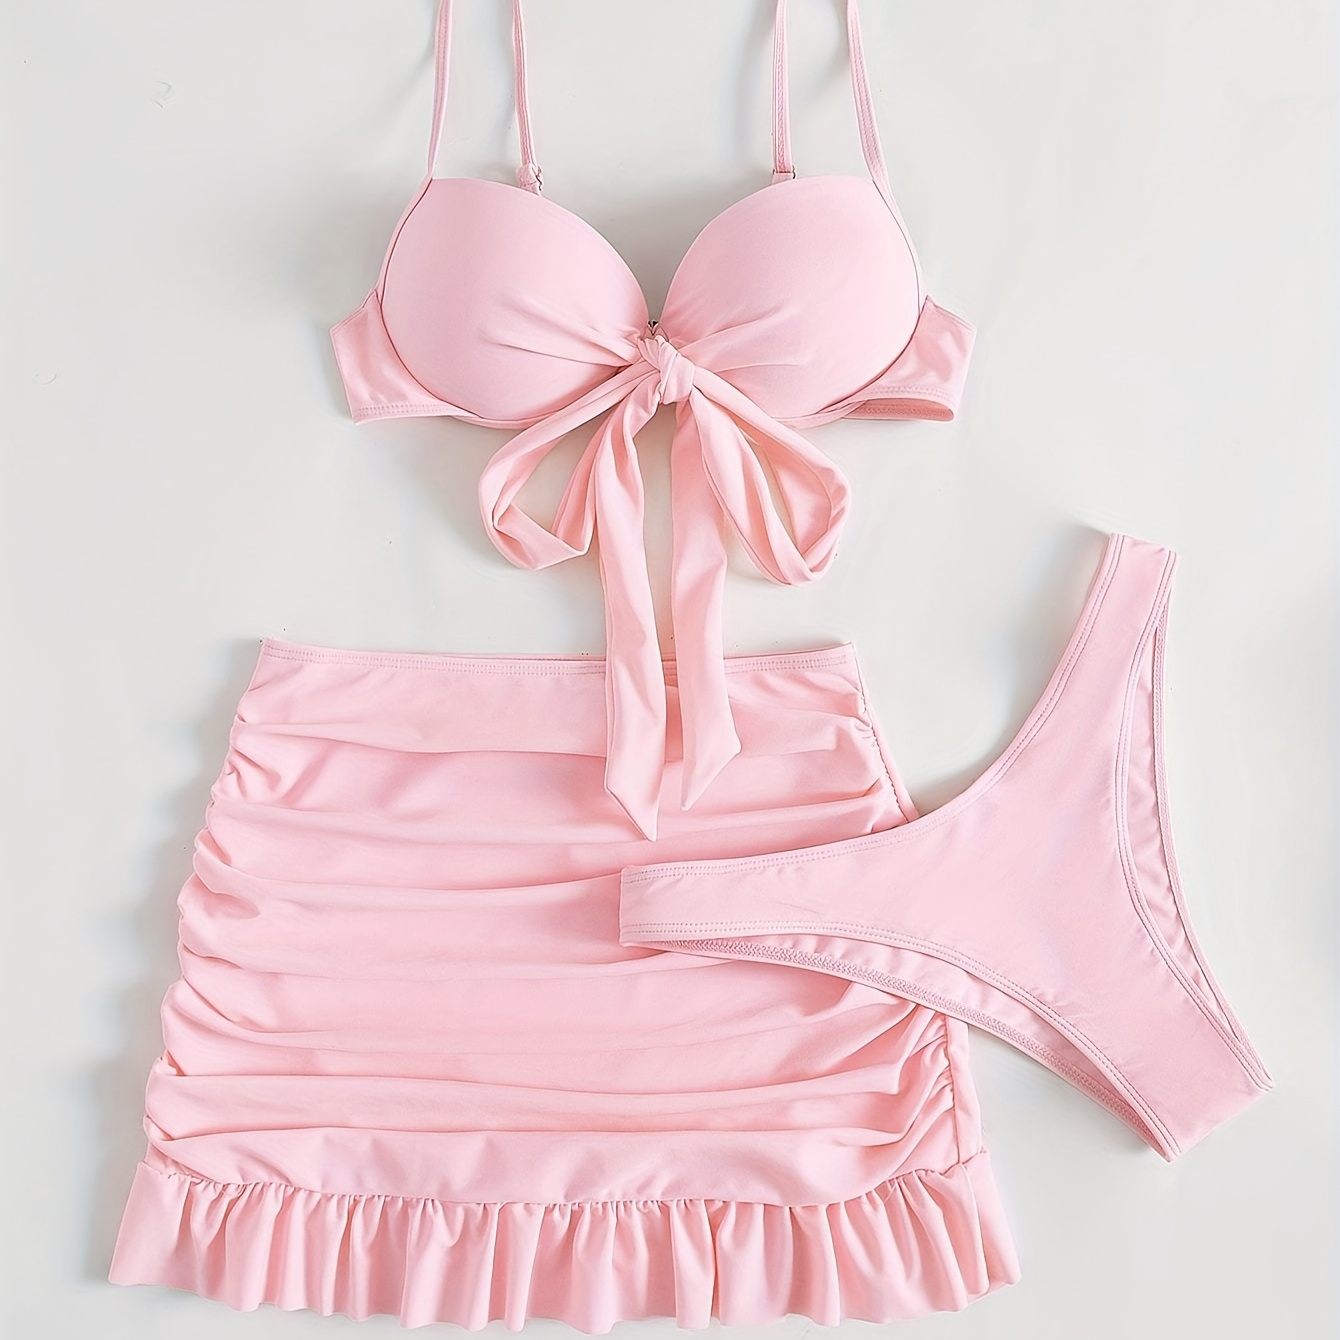 

Plain Pinkish Bikini Set With Bow Tie Top & & Panty Skirt, Beachwear Swimsuit, Vacation Style Swimwear, Spaghetti Strap, Three-piece Set